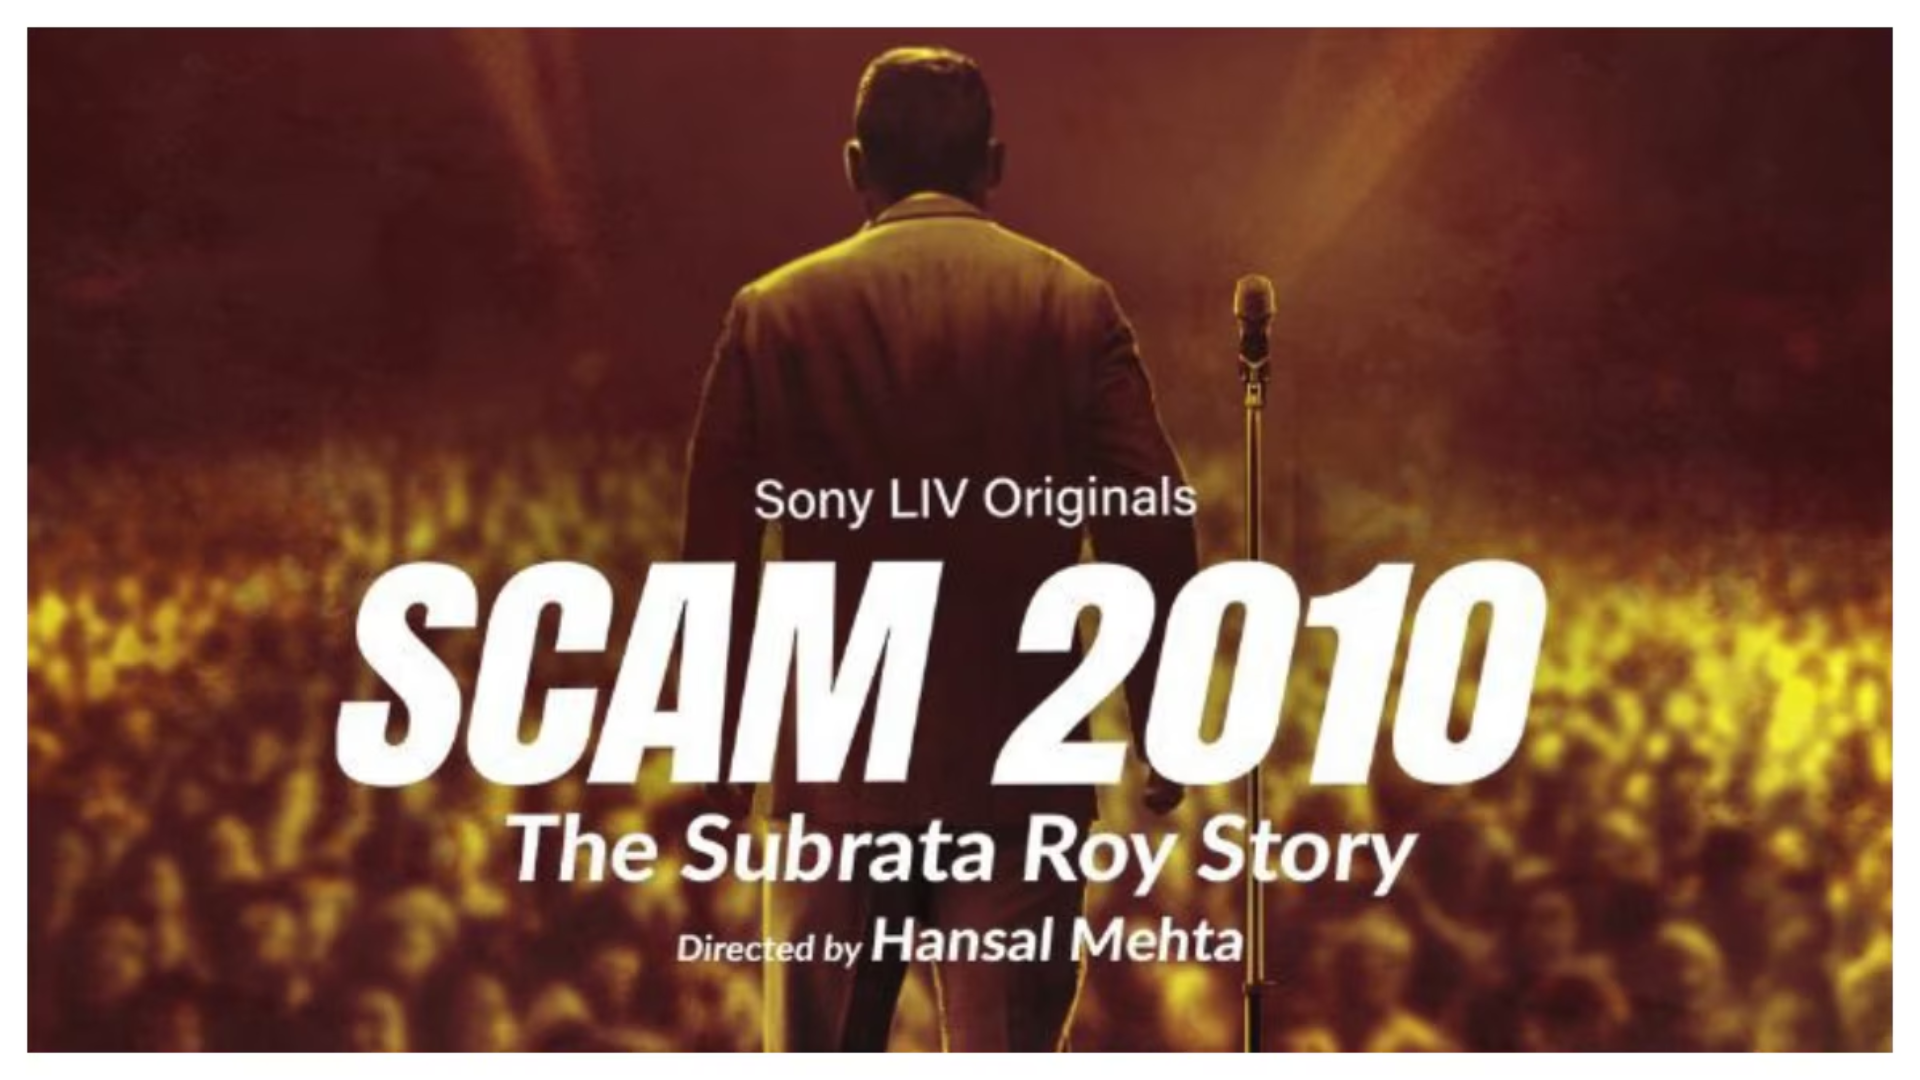 'Scam 2010 - The Subrata Roy Saga' Hansal Mehta Announces The next 'Scam' Series